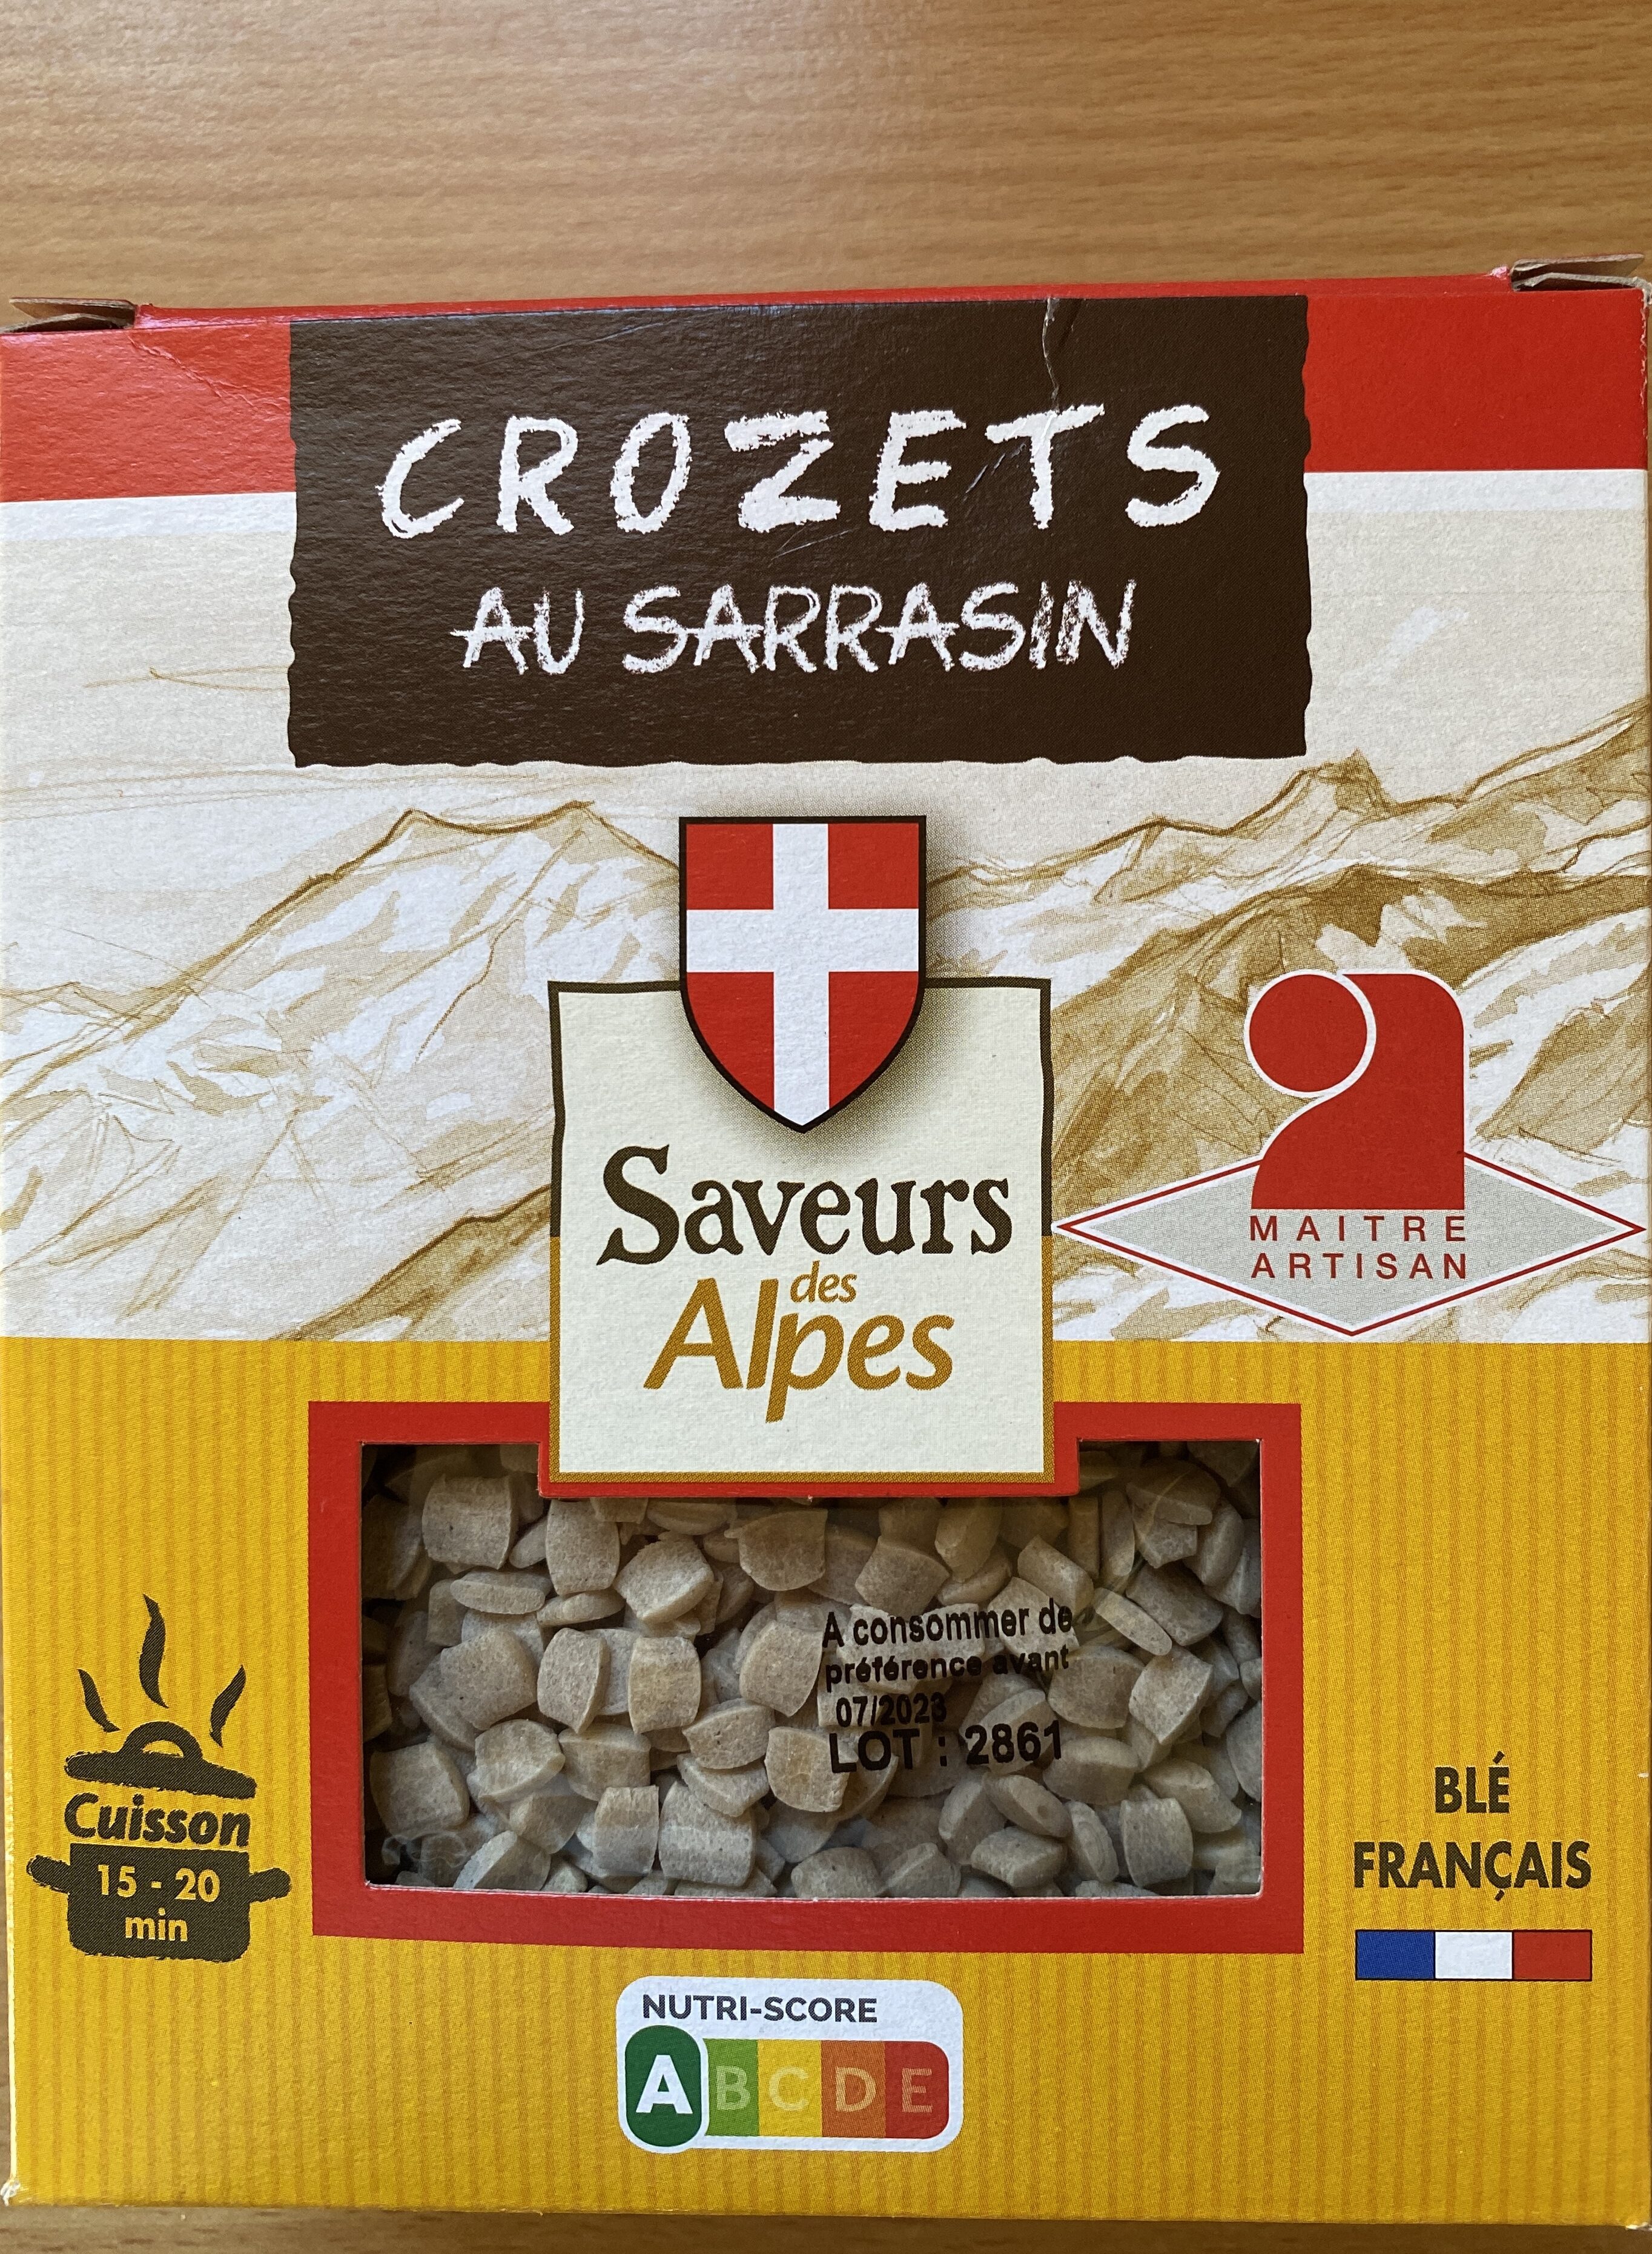 Crozets au sarrasin - Product - fr